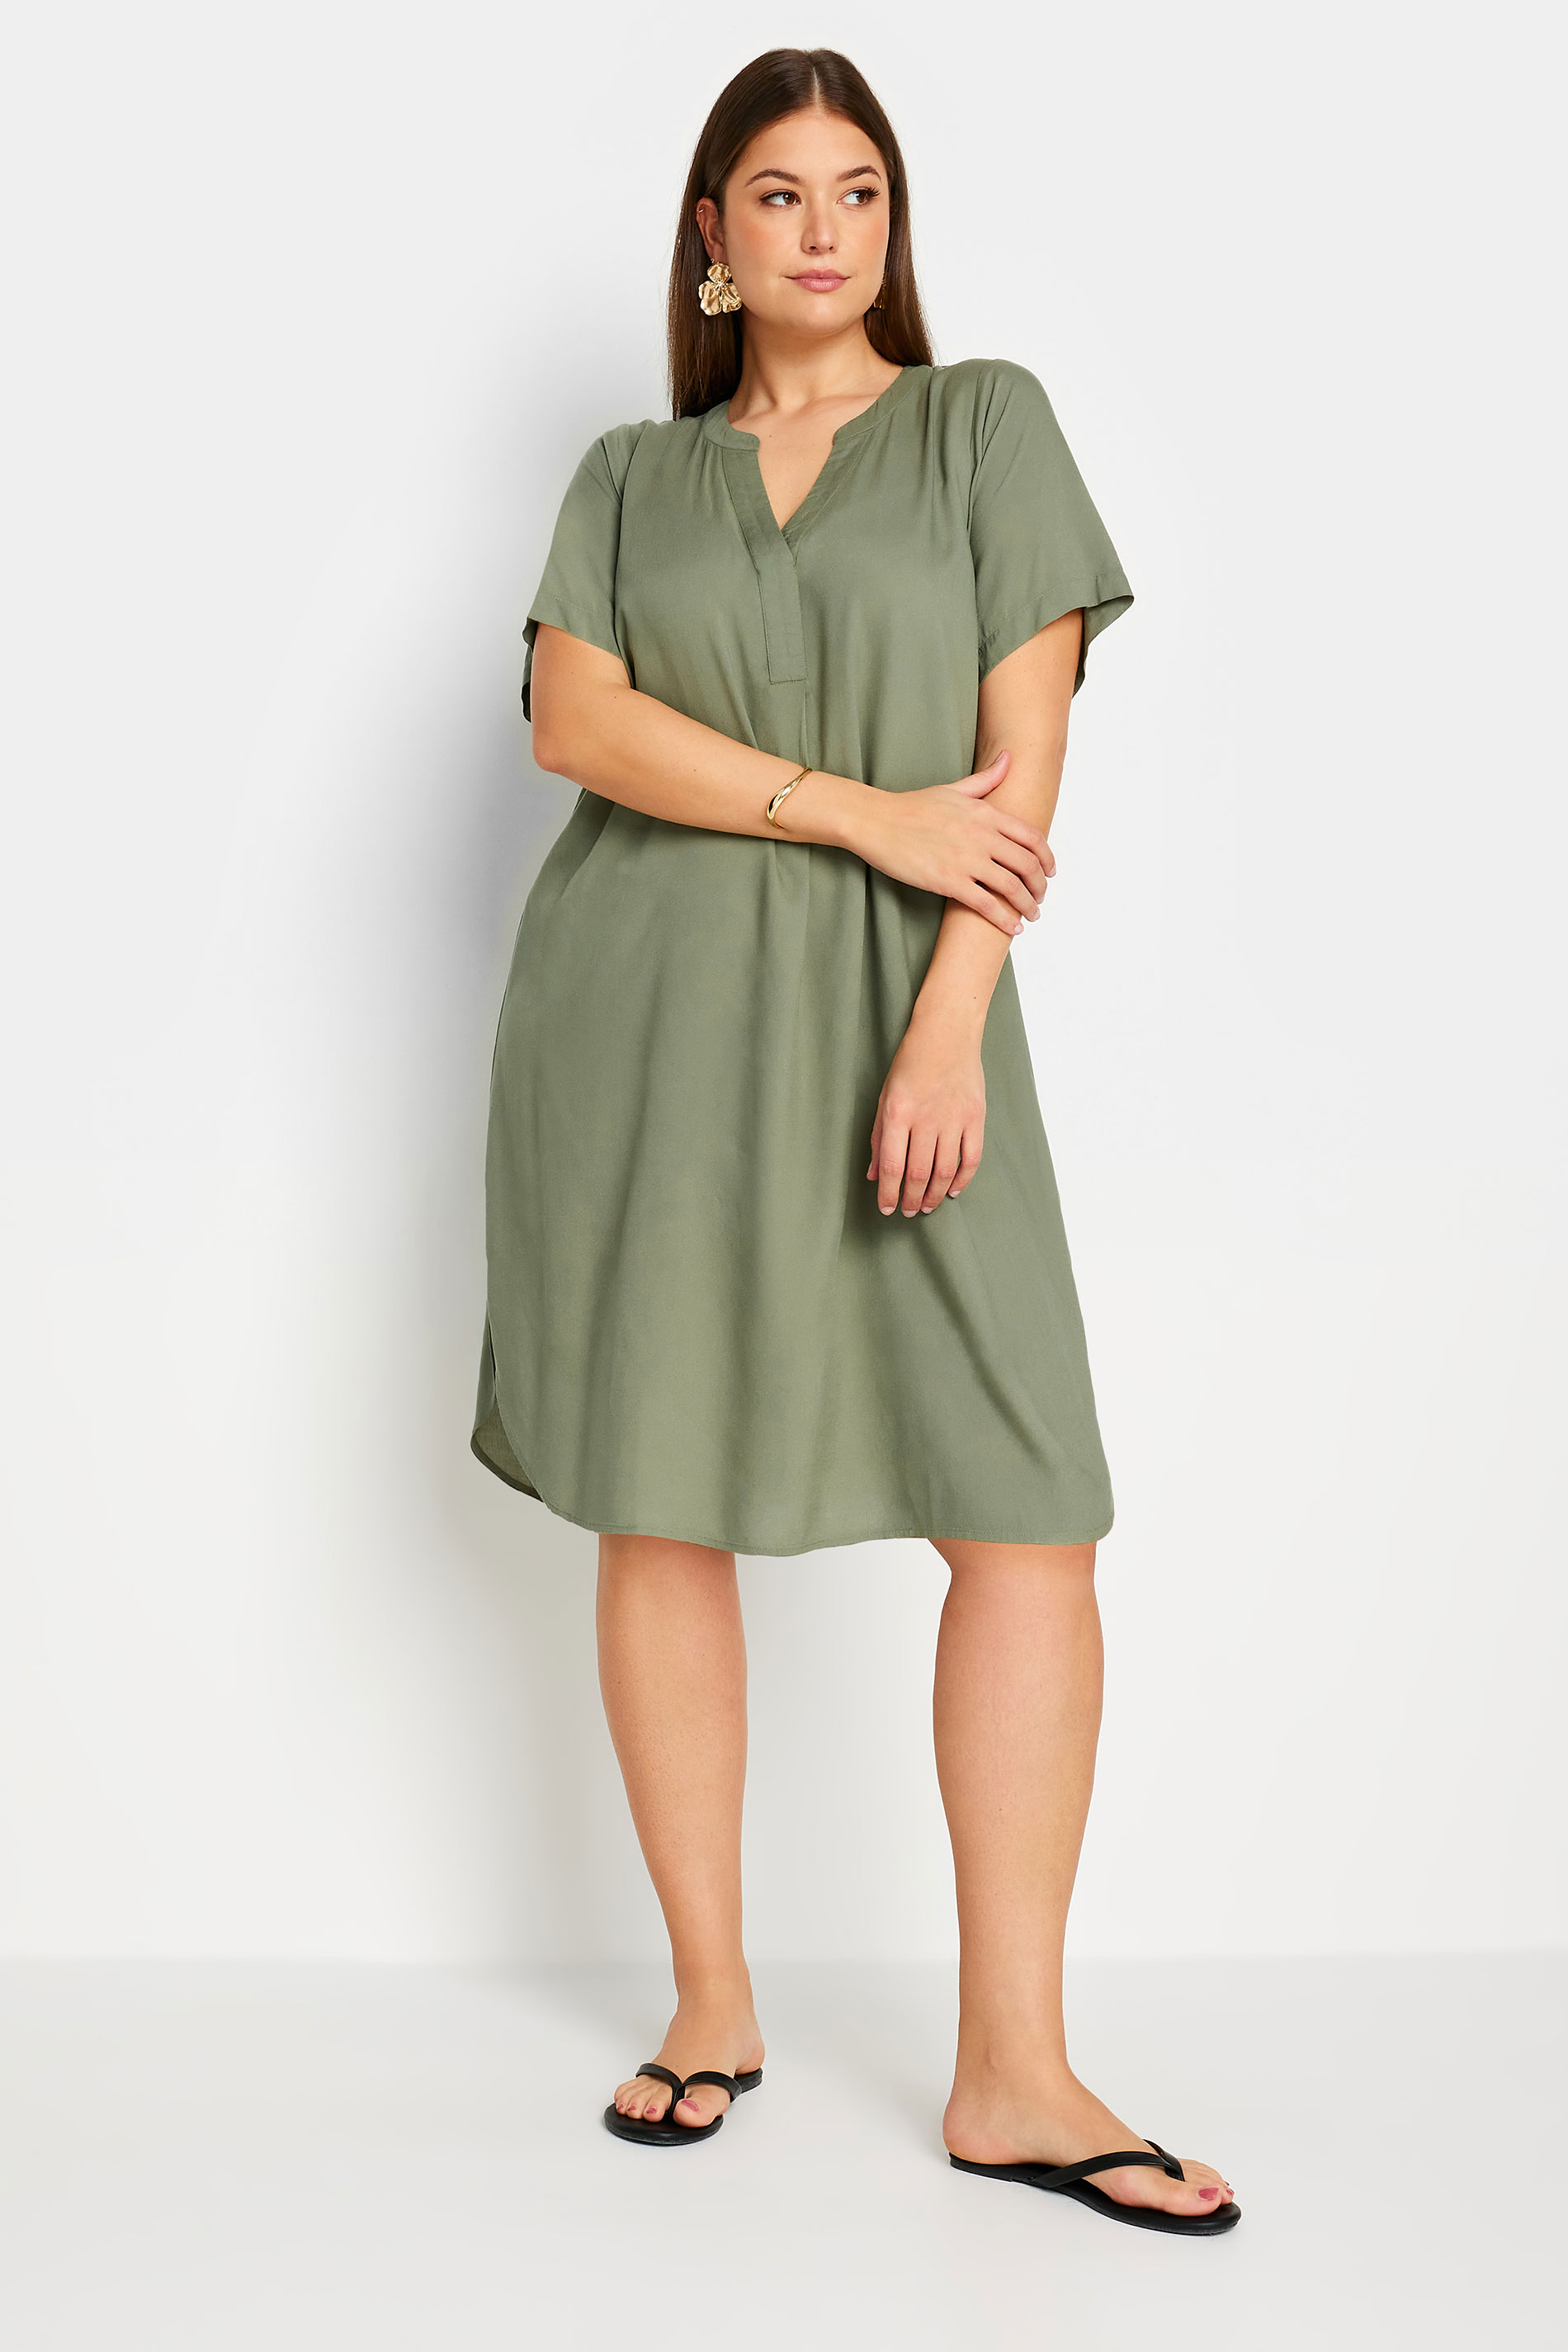 Yours Plus Size Khaki Green Tunic Dress | Yours Clothing 2